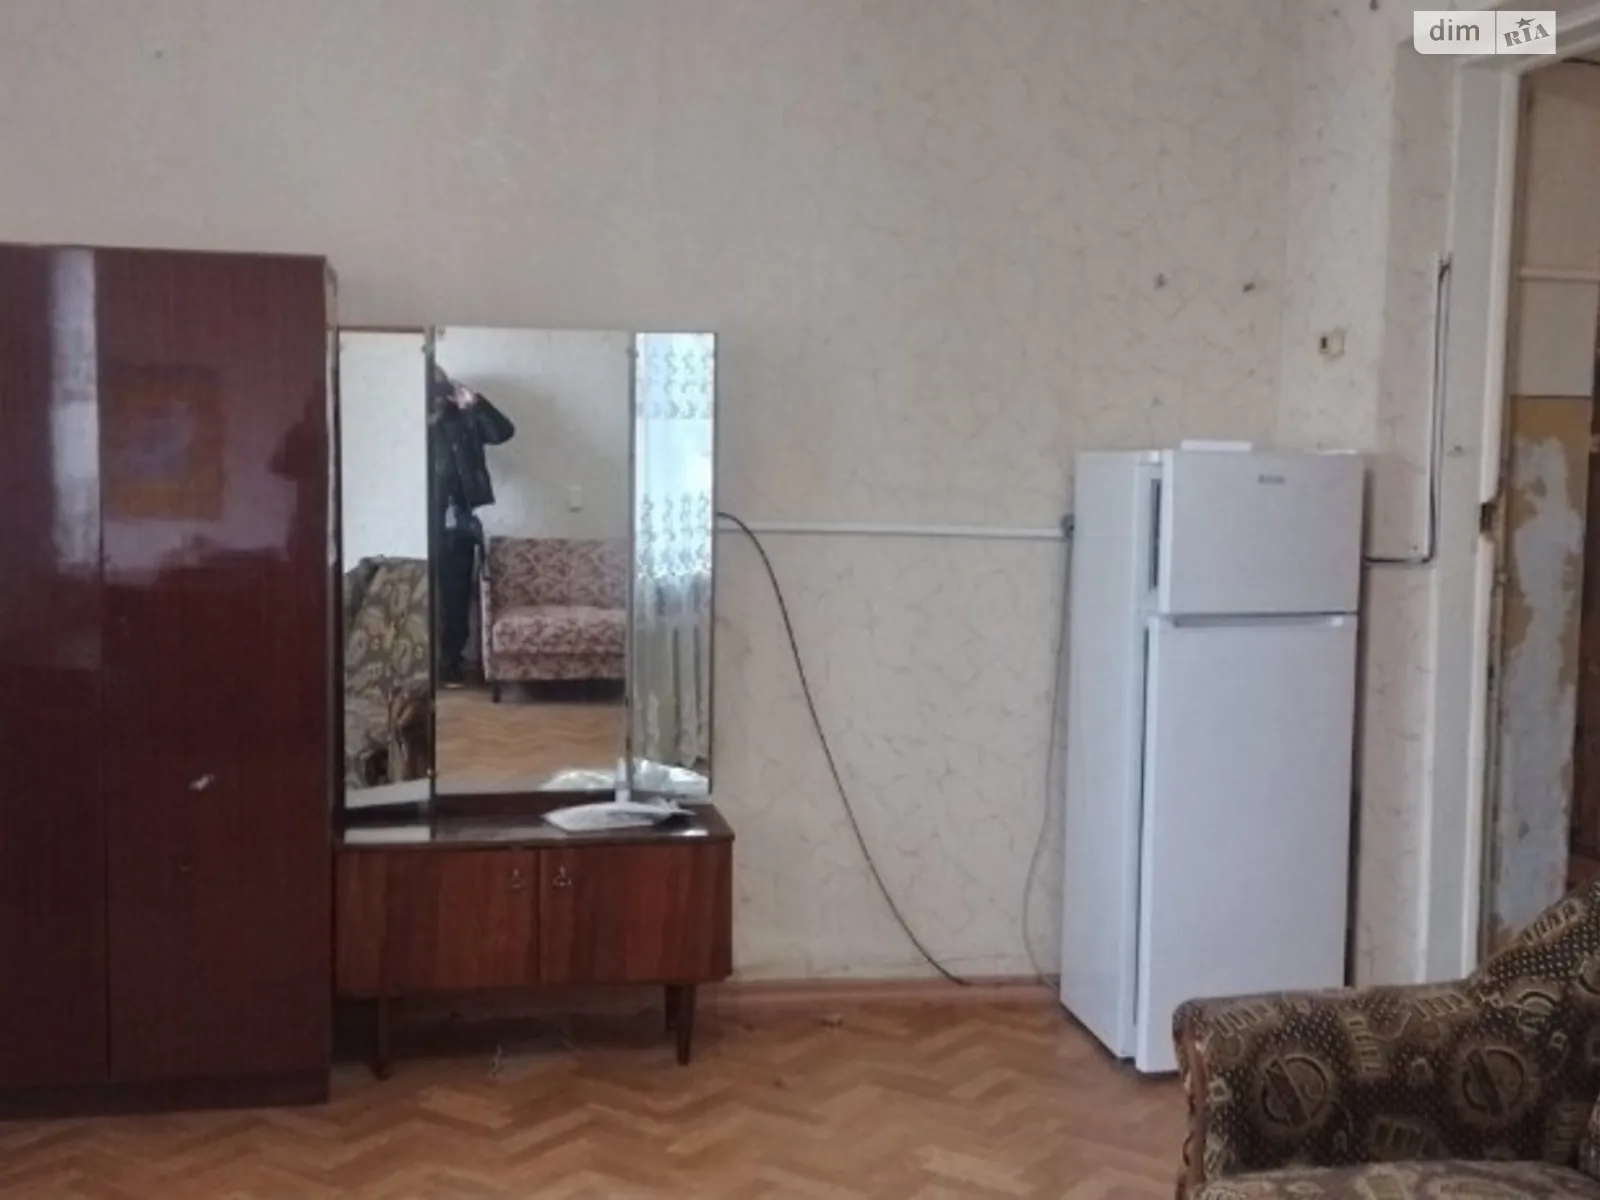 Сдается в аренду комната 28 кв. м в Харькове - фото 2